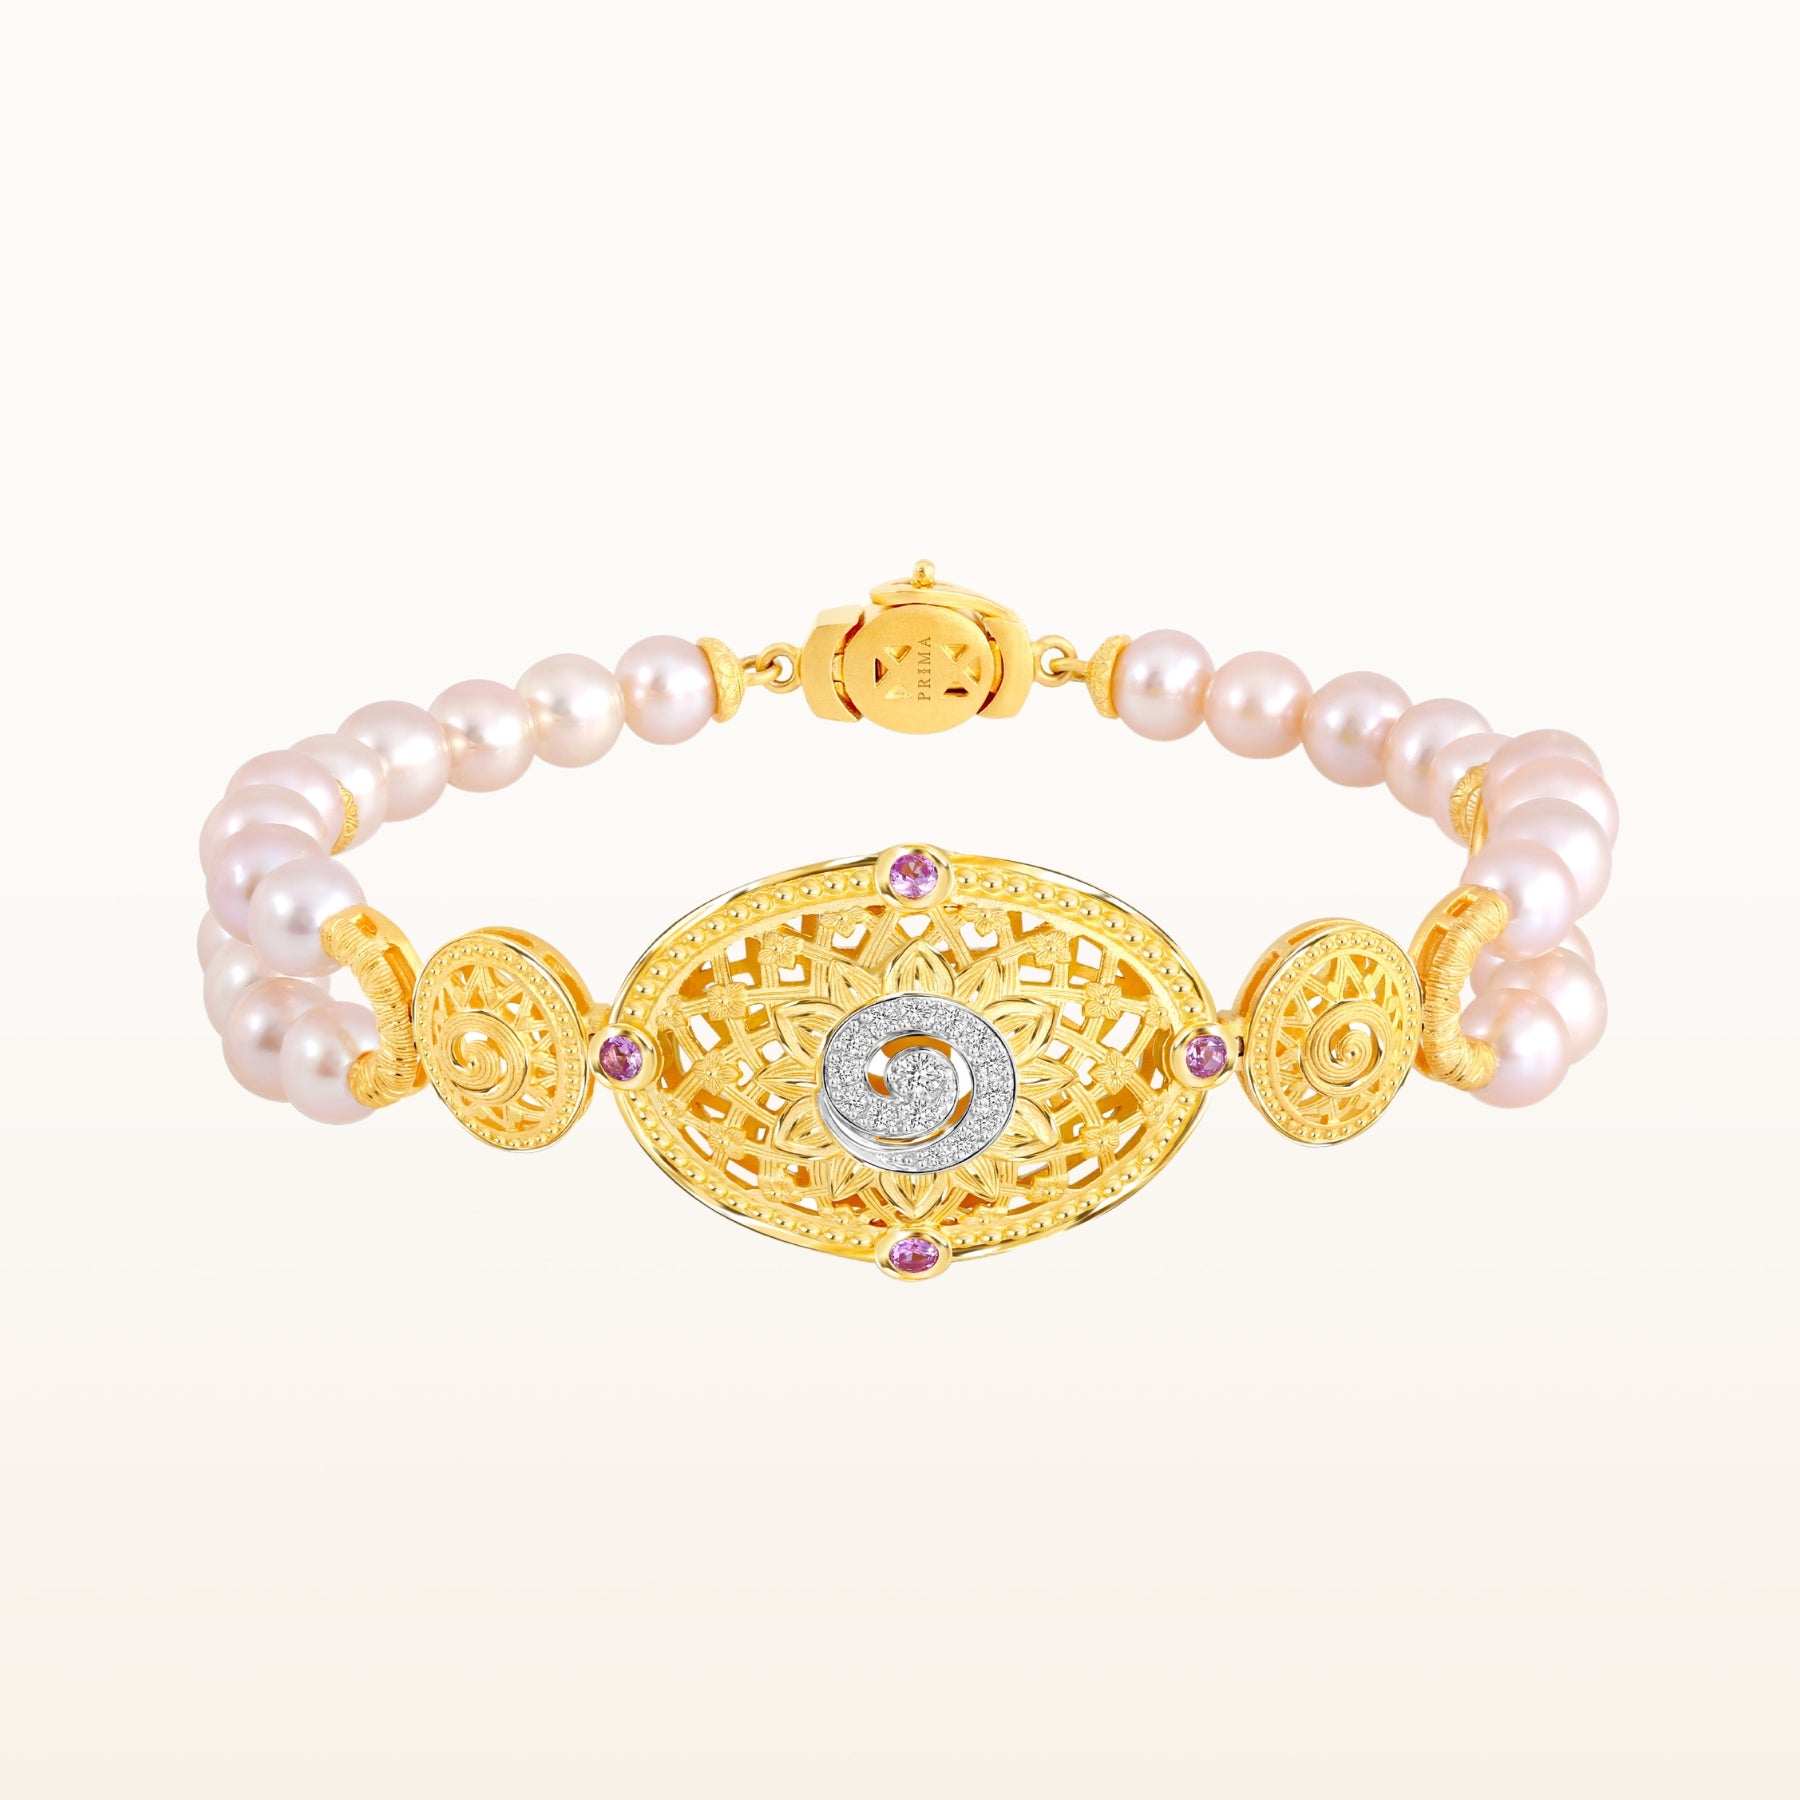 Buy Simple Daily Wear Simple Gold Bracelet Designs for Ladies